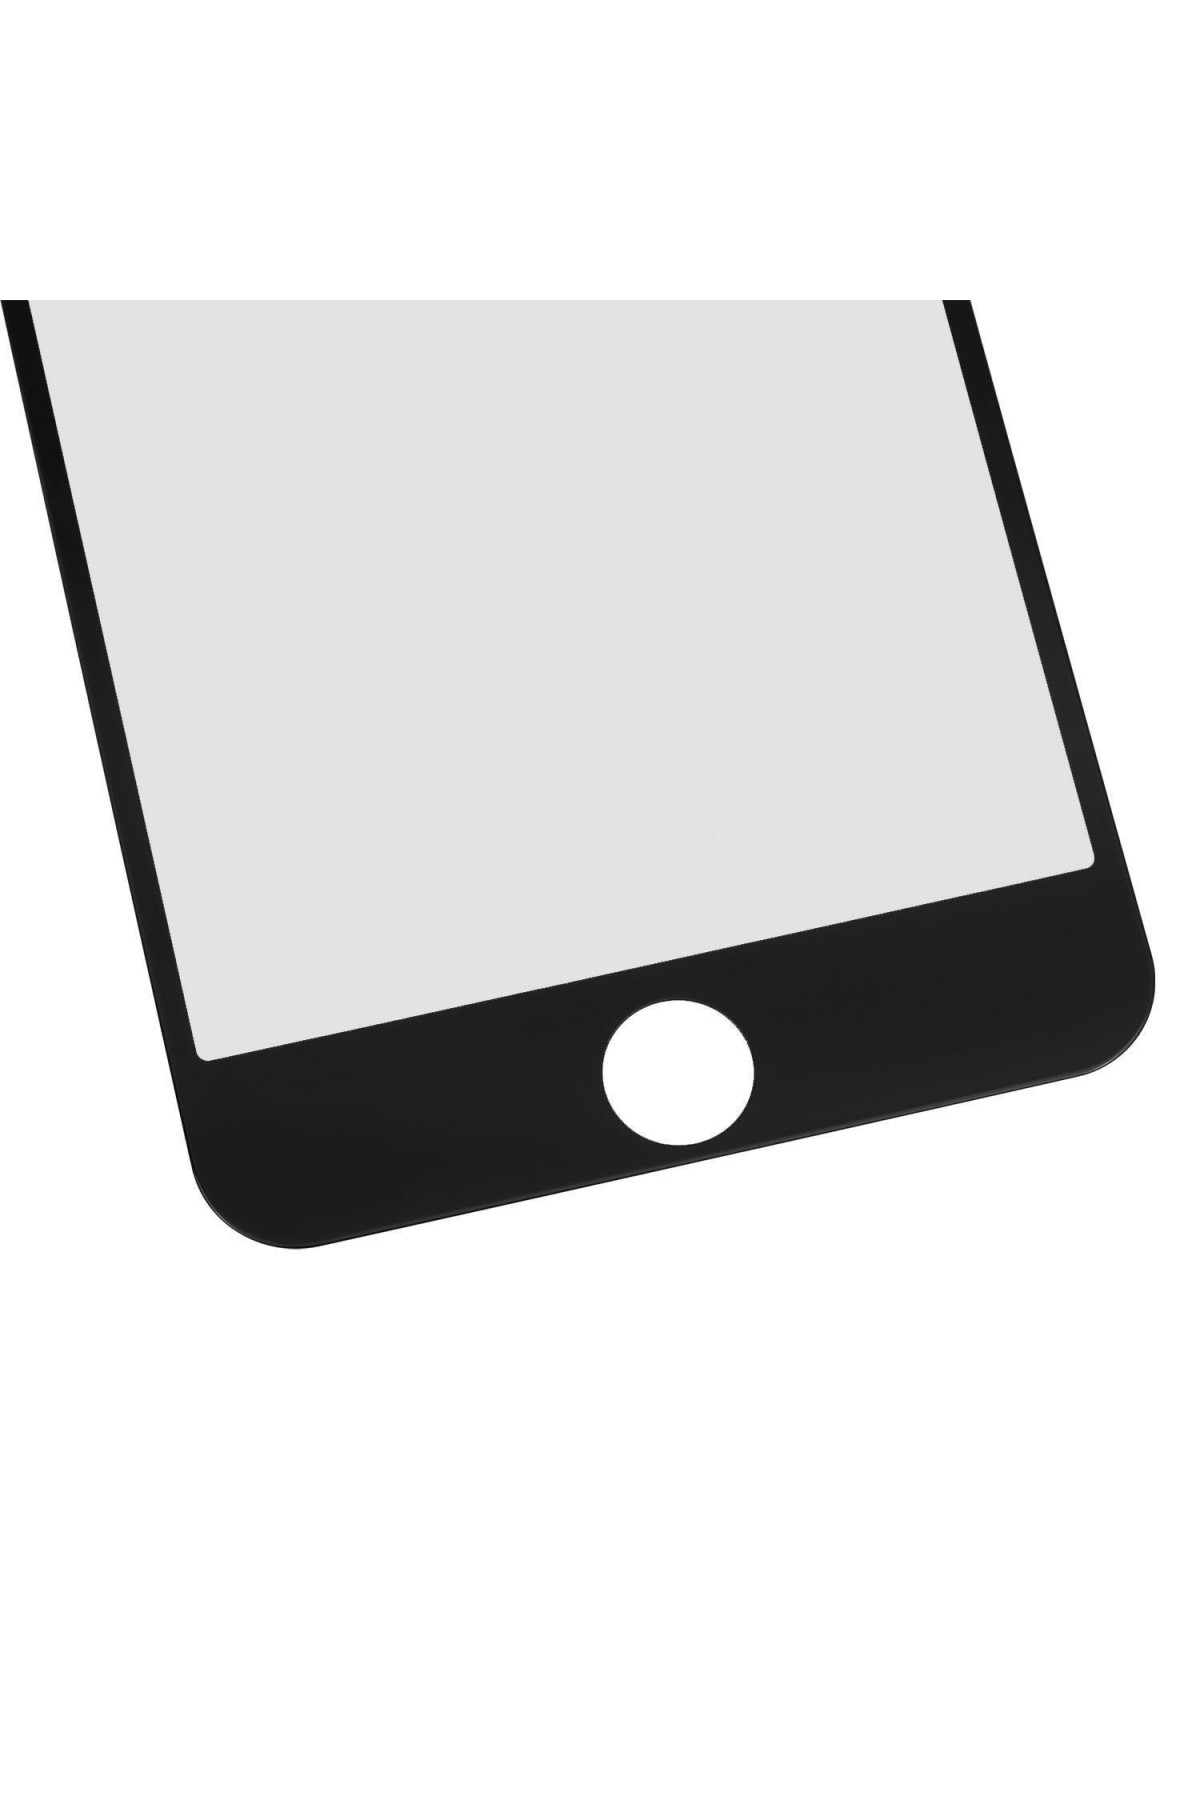 Iphone 8 Plus Gizli Hayalet Ekran Koruyucu Mat Seramik Tam Kaplama